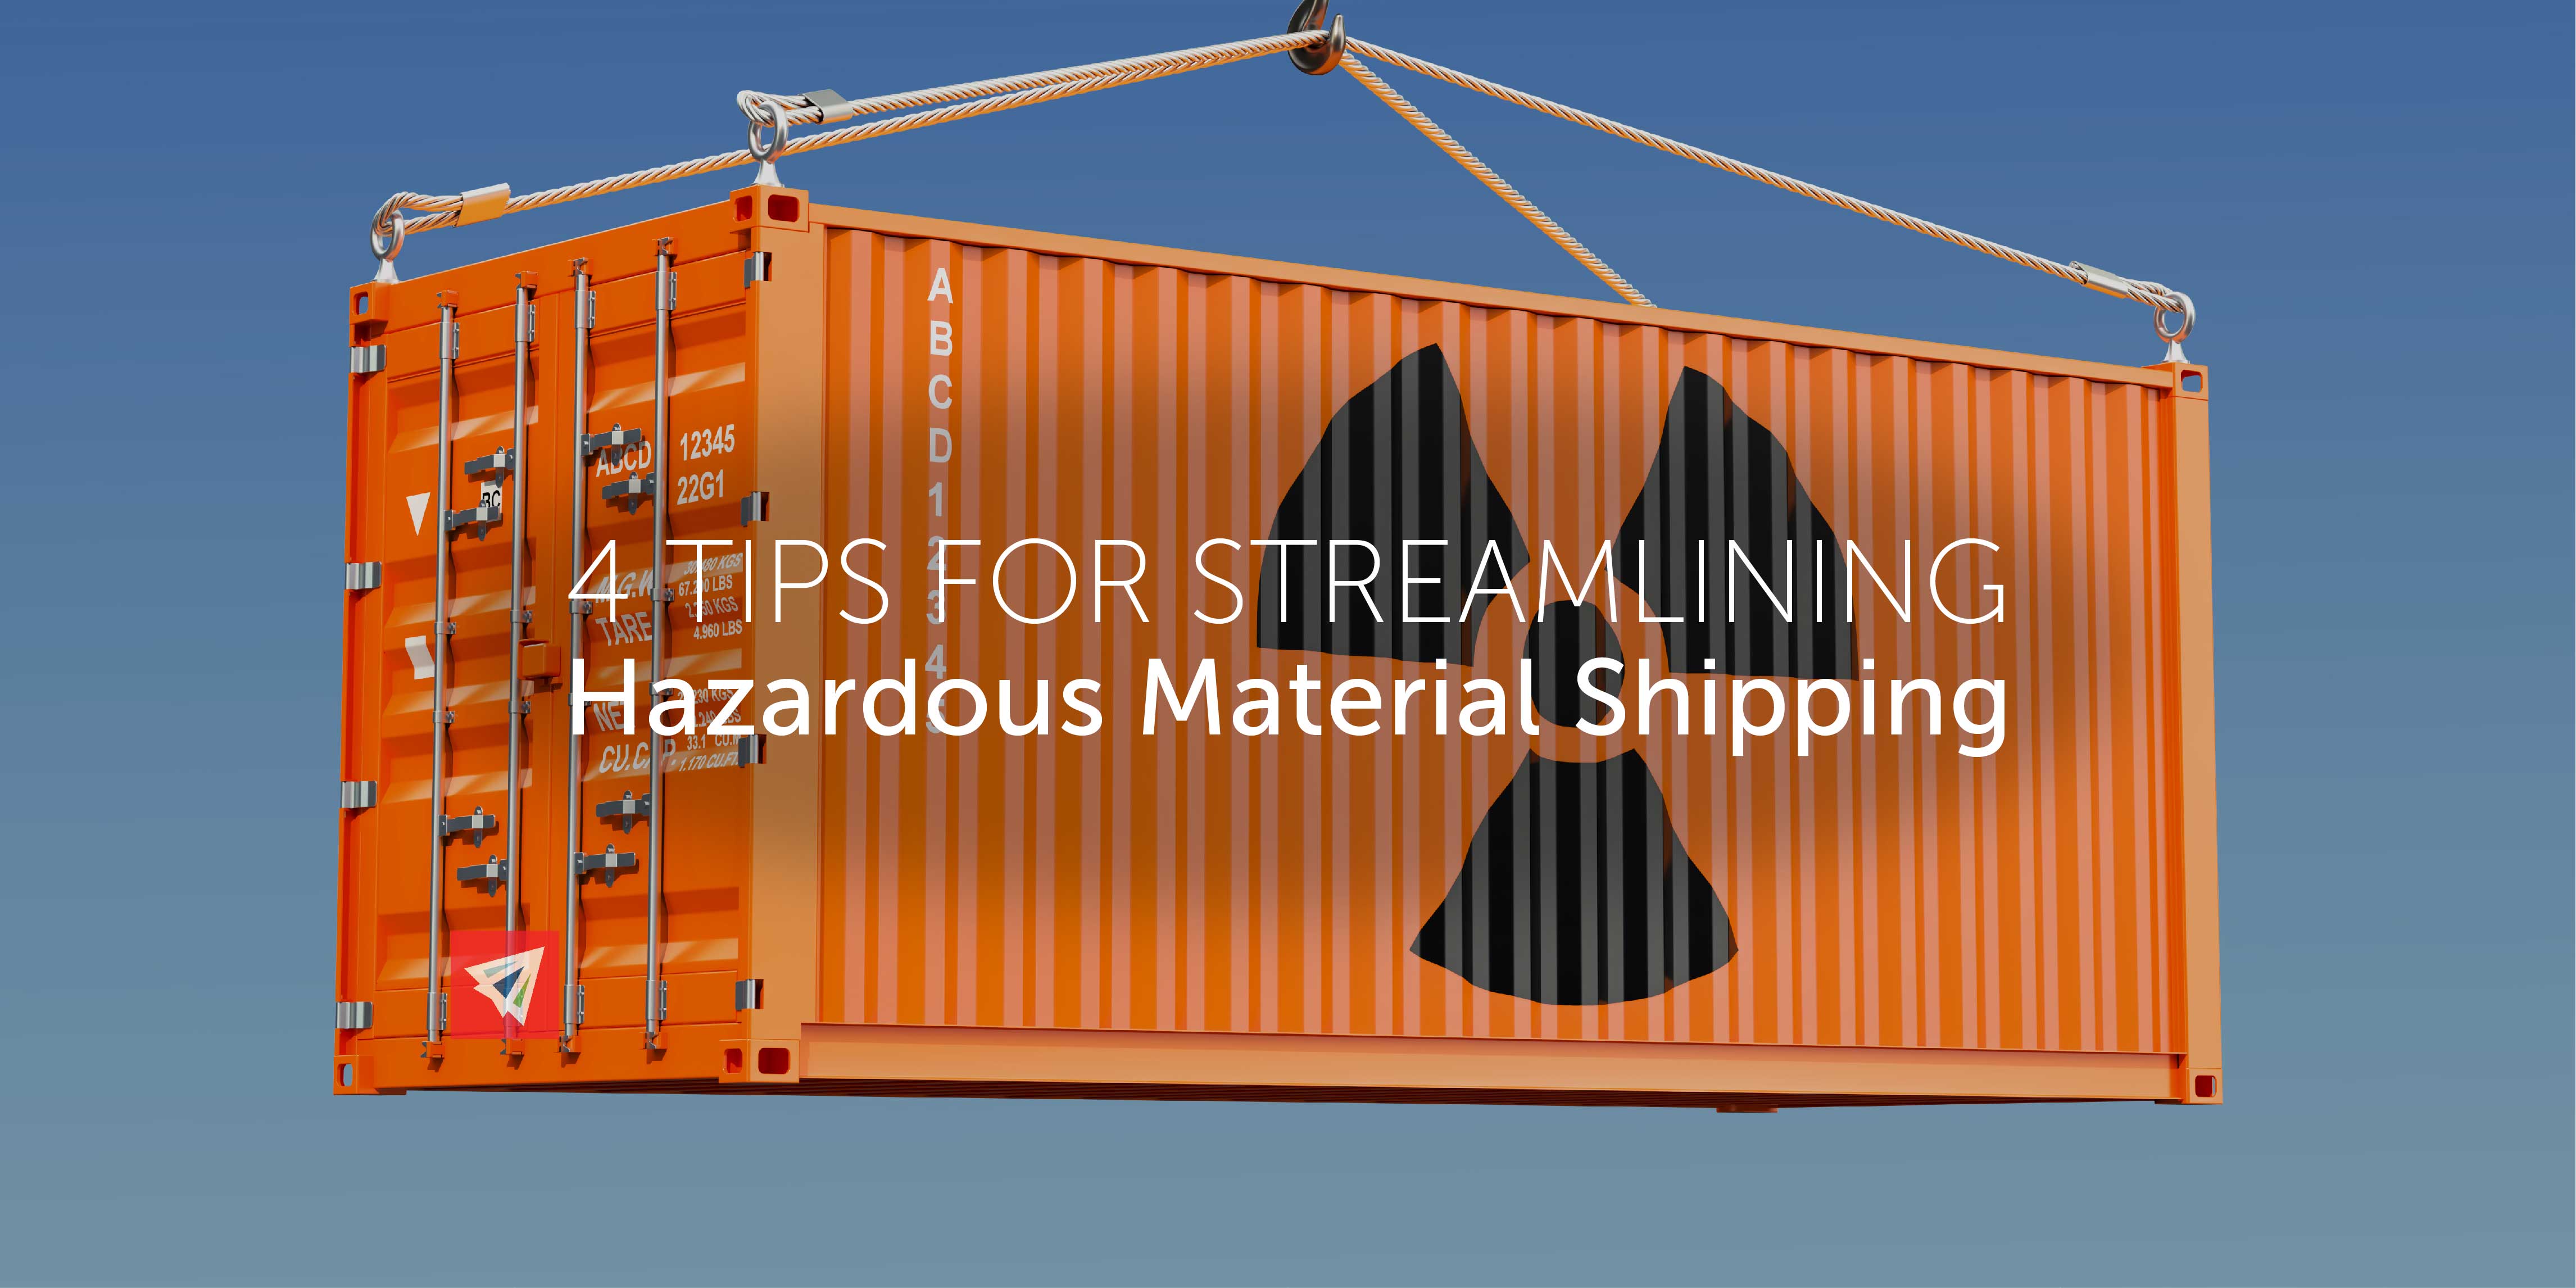 4 Tips for Streamlining Hazardous Material Shipping